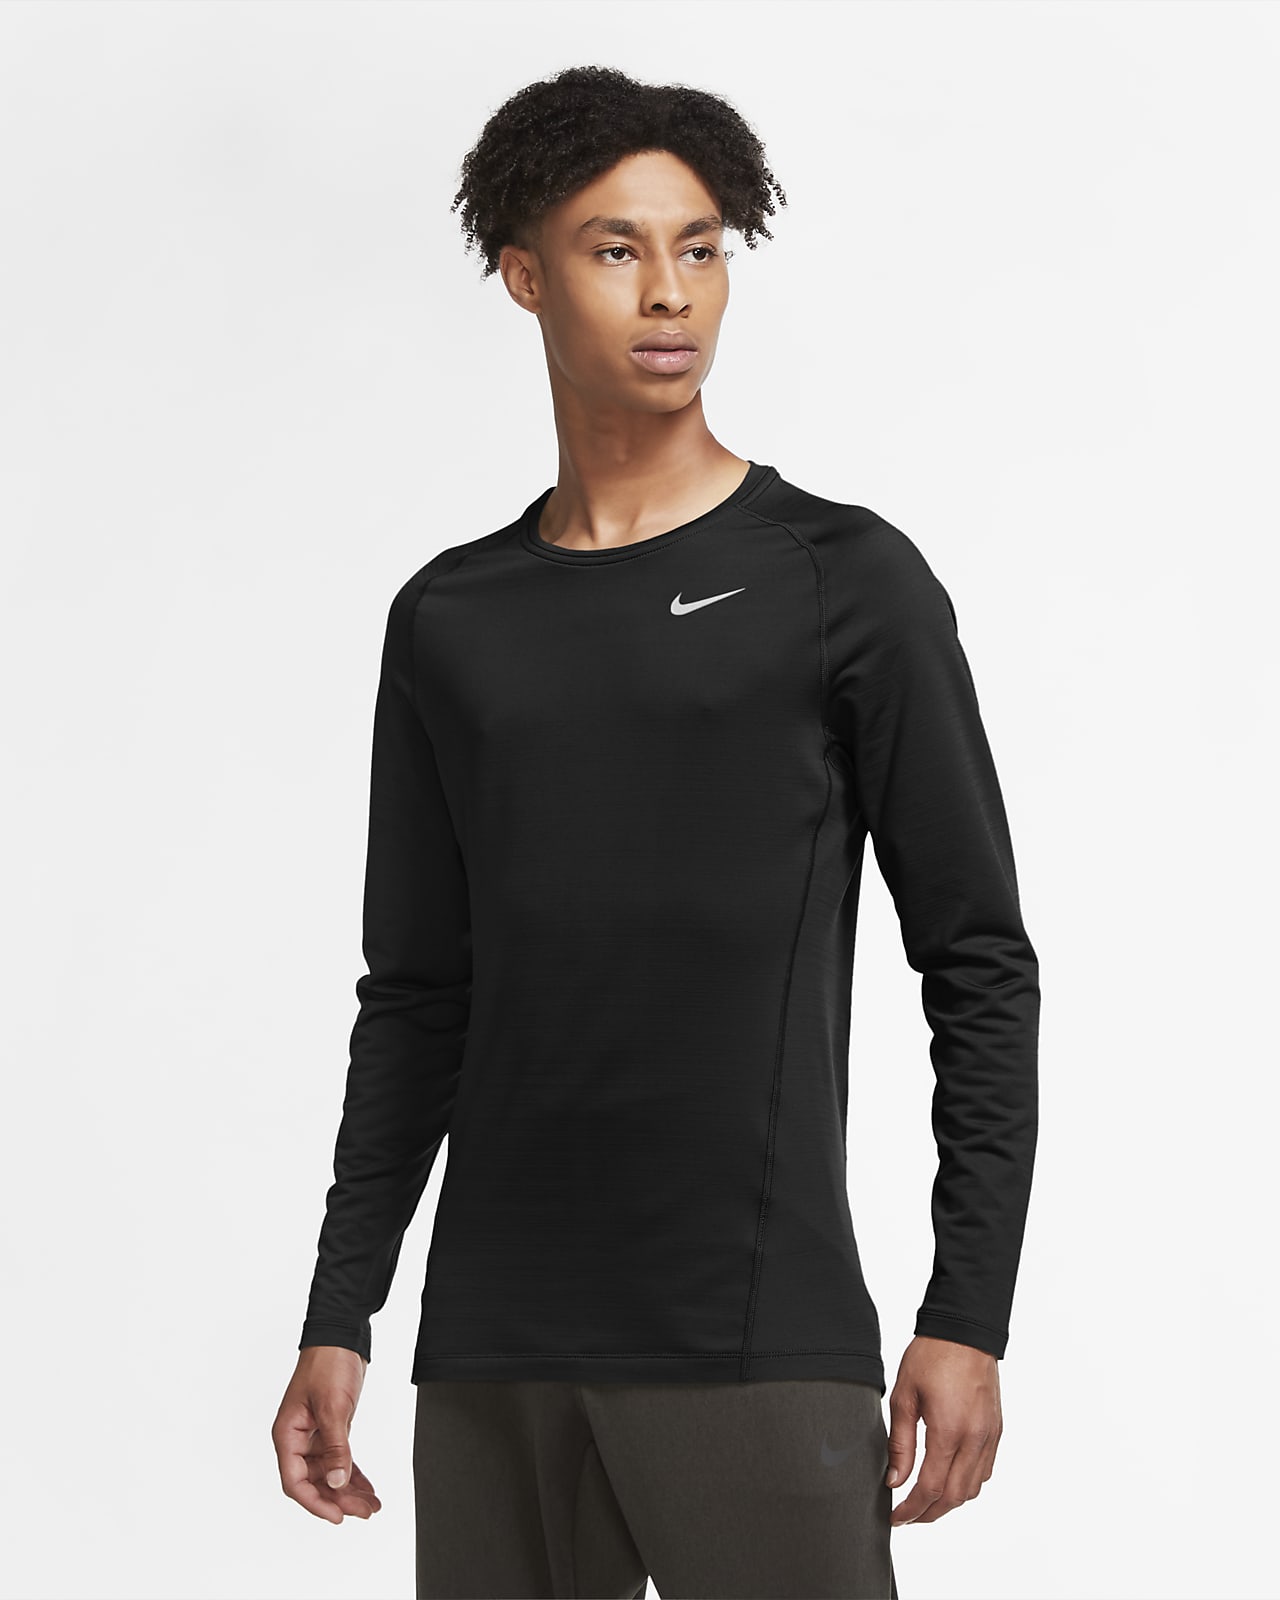 Nike Pro Warm Men's Long-Sleeve Top. Nike MA